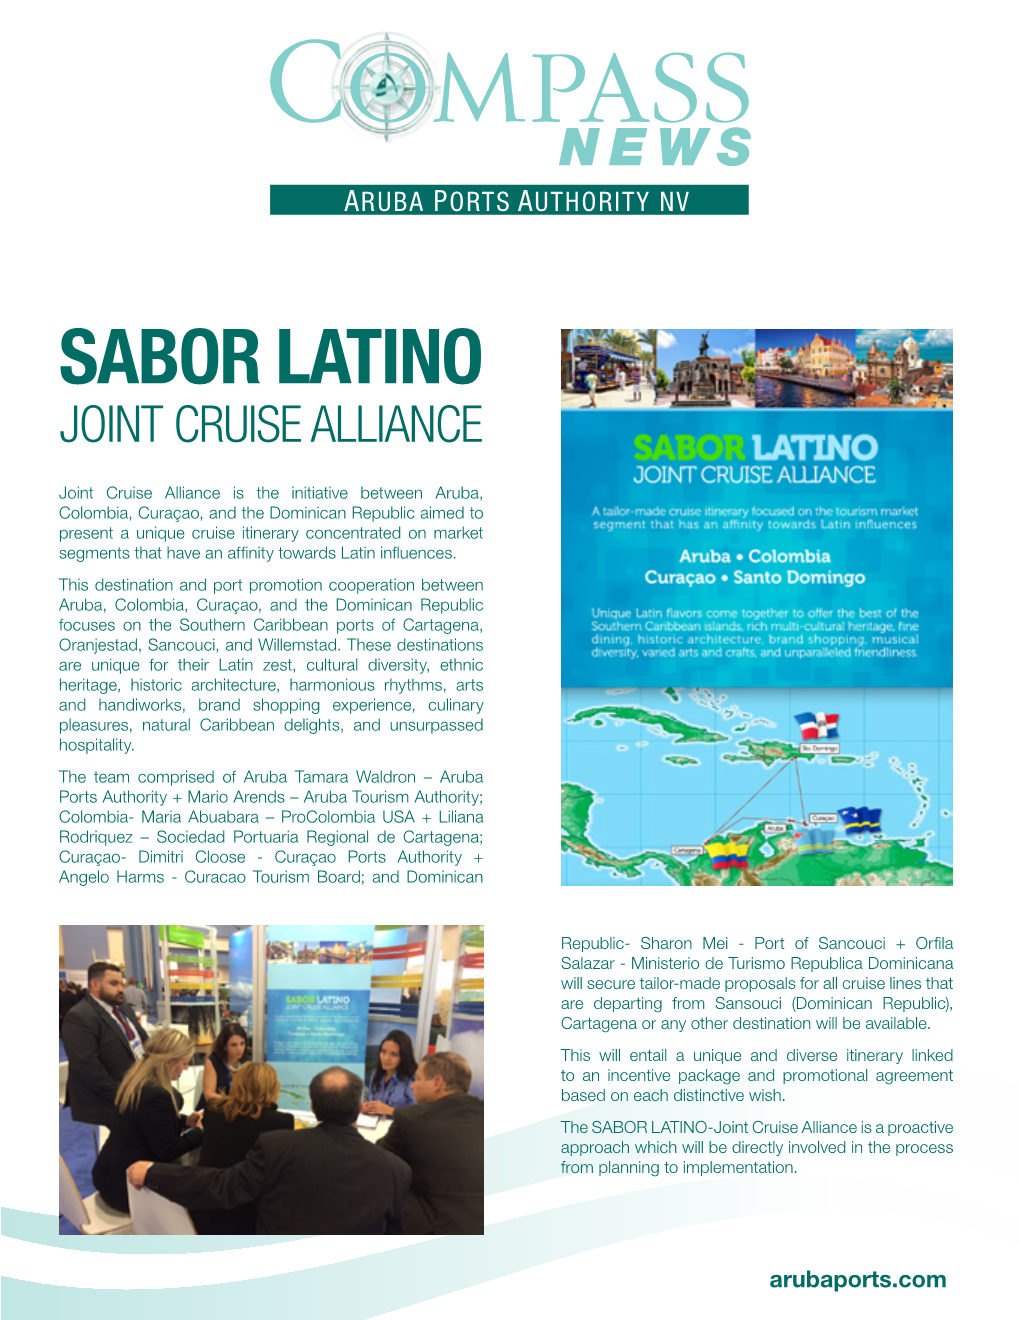 Sabor Latino Joint Cruise Alliance